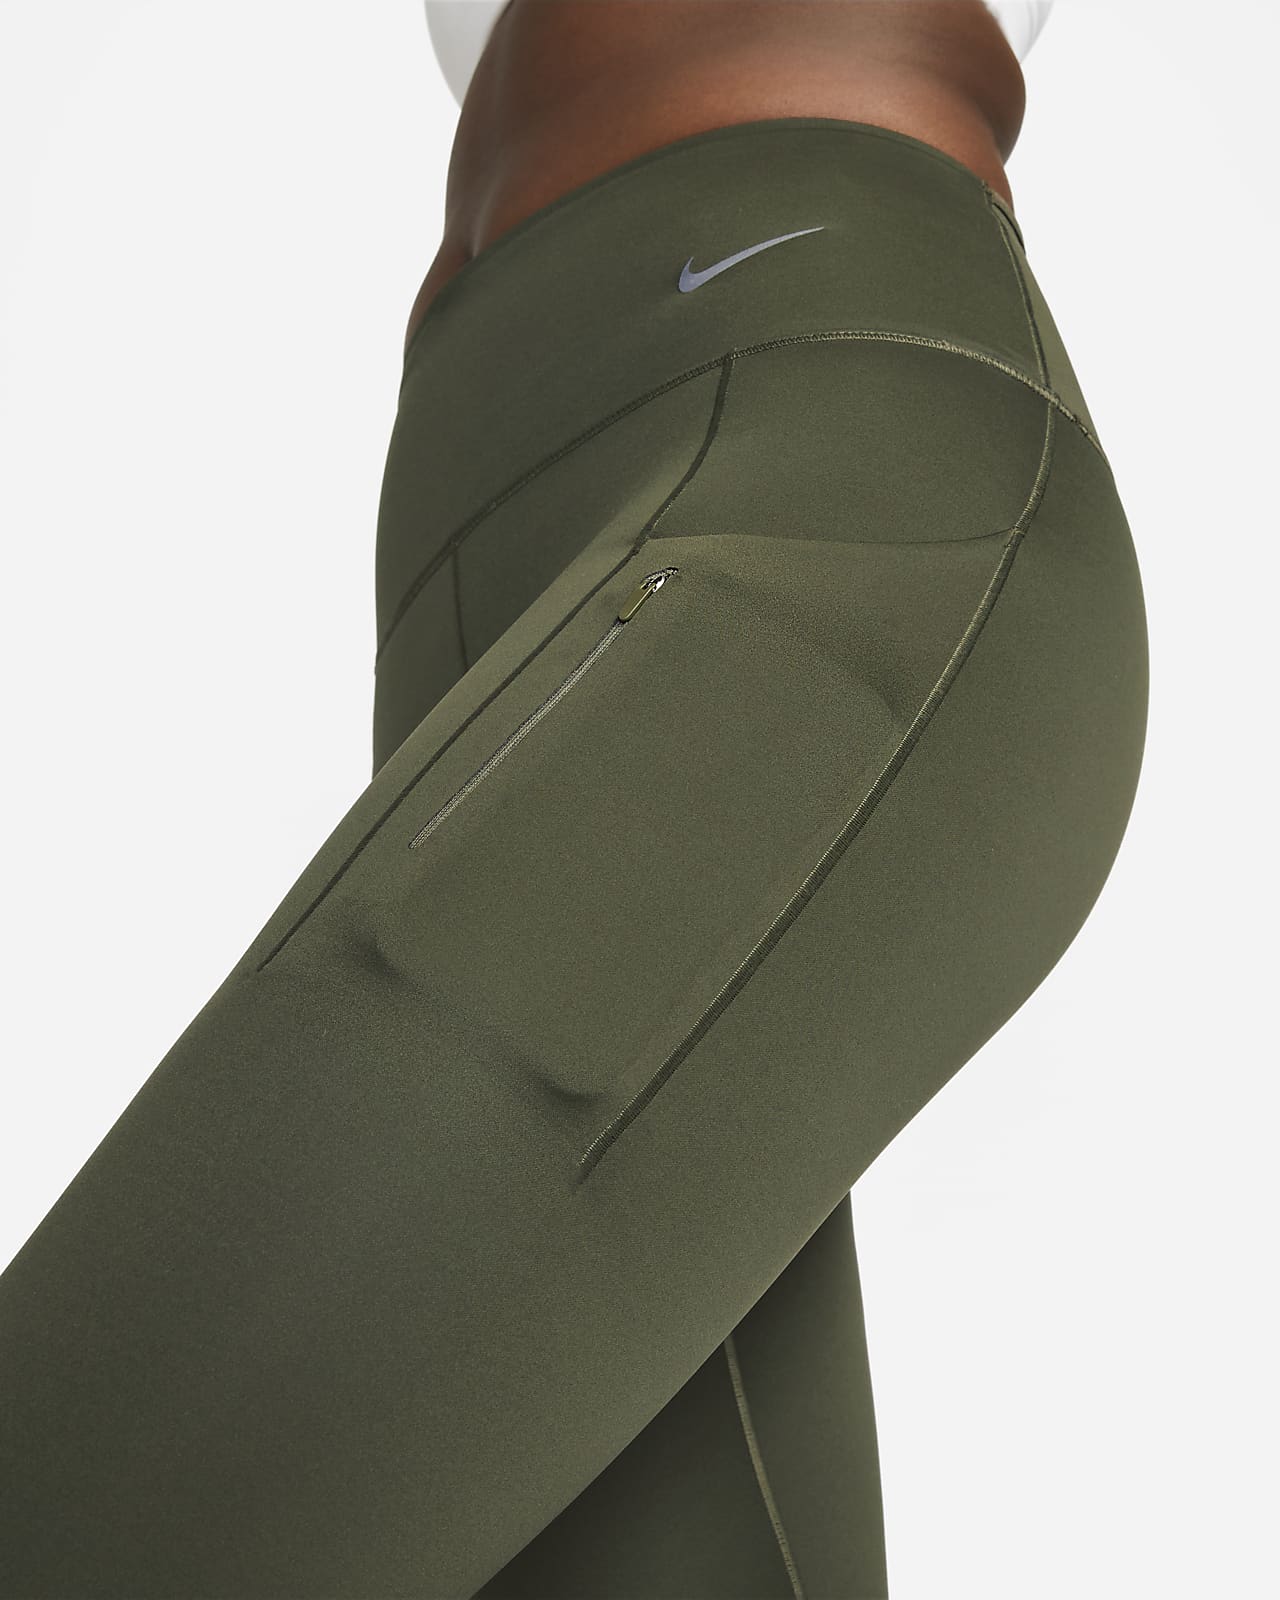 Nike Go Women\'s Firm-Support Nike Pockets. Leggings Full-Length with LU Mid-Rise